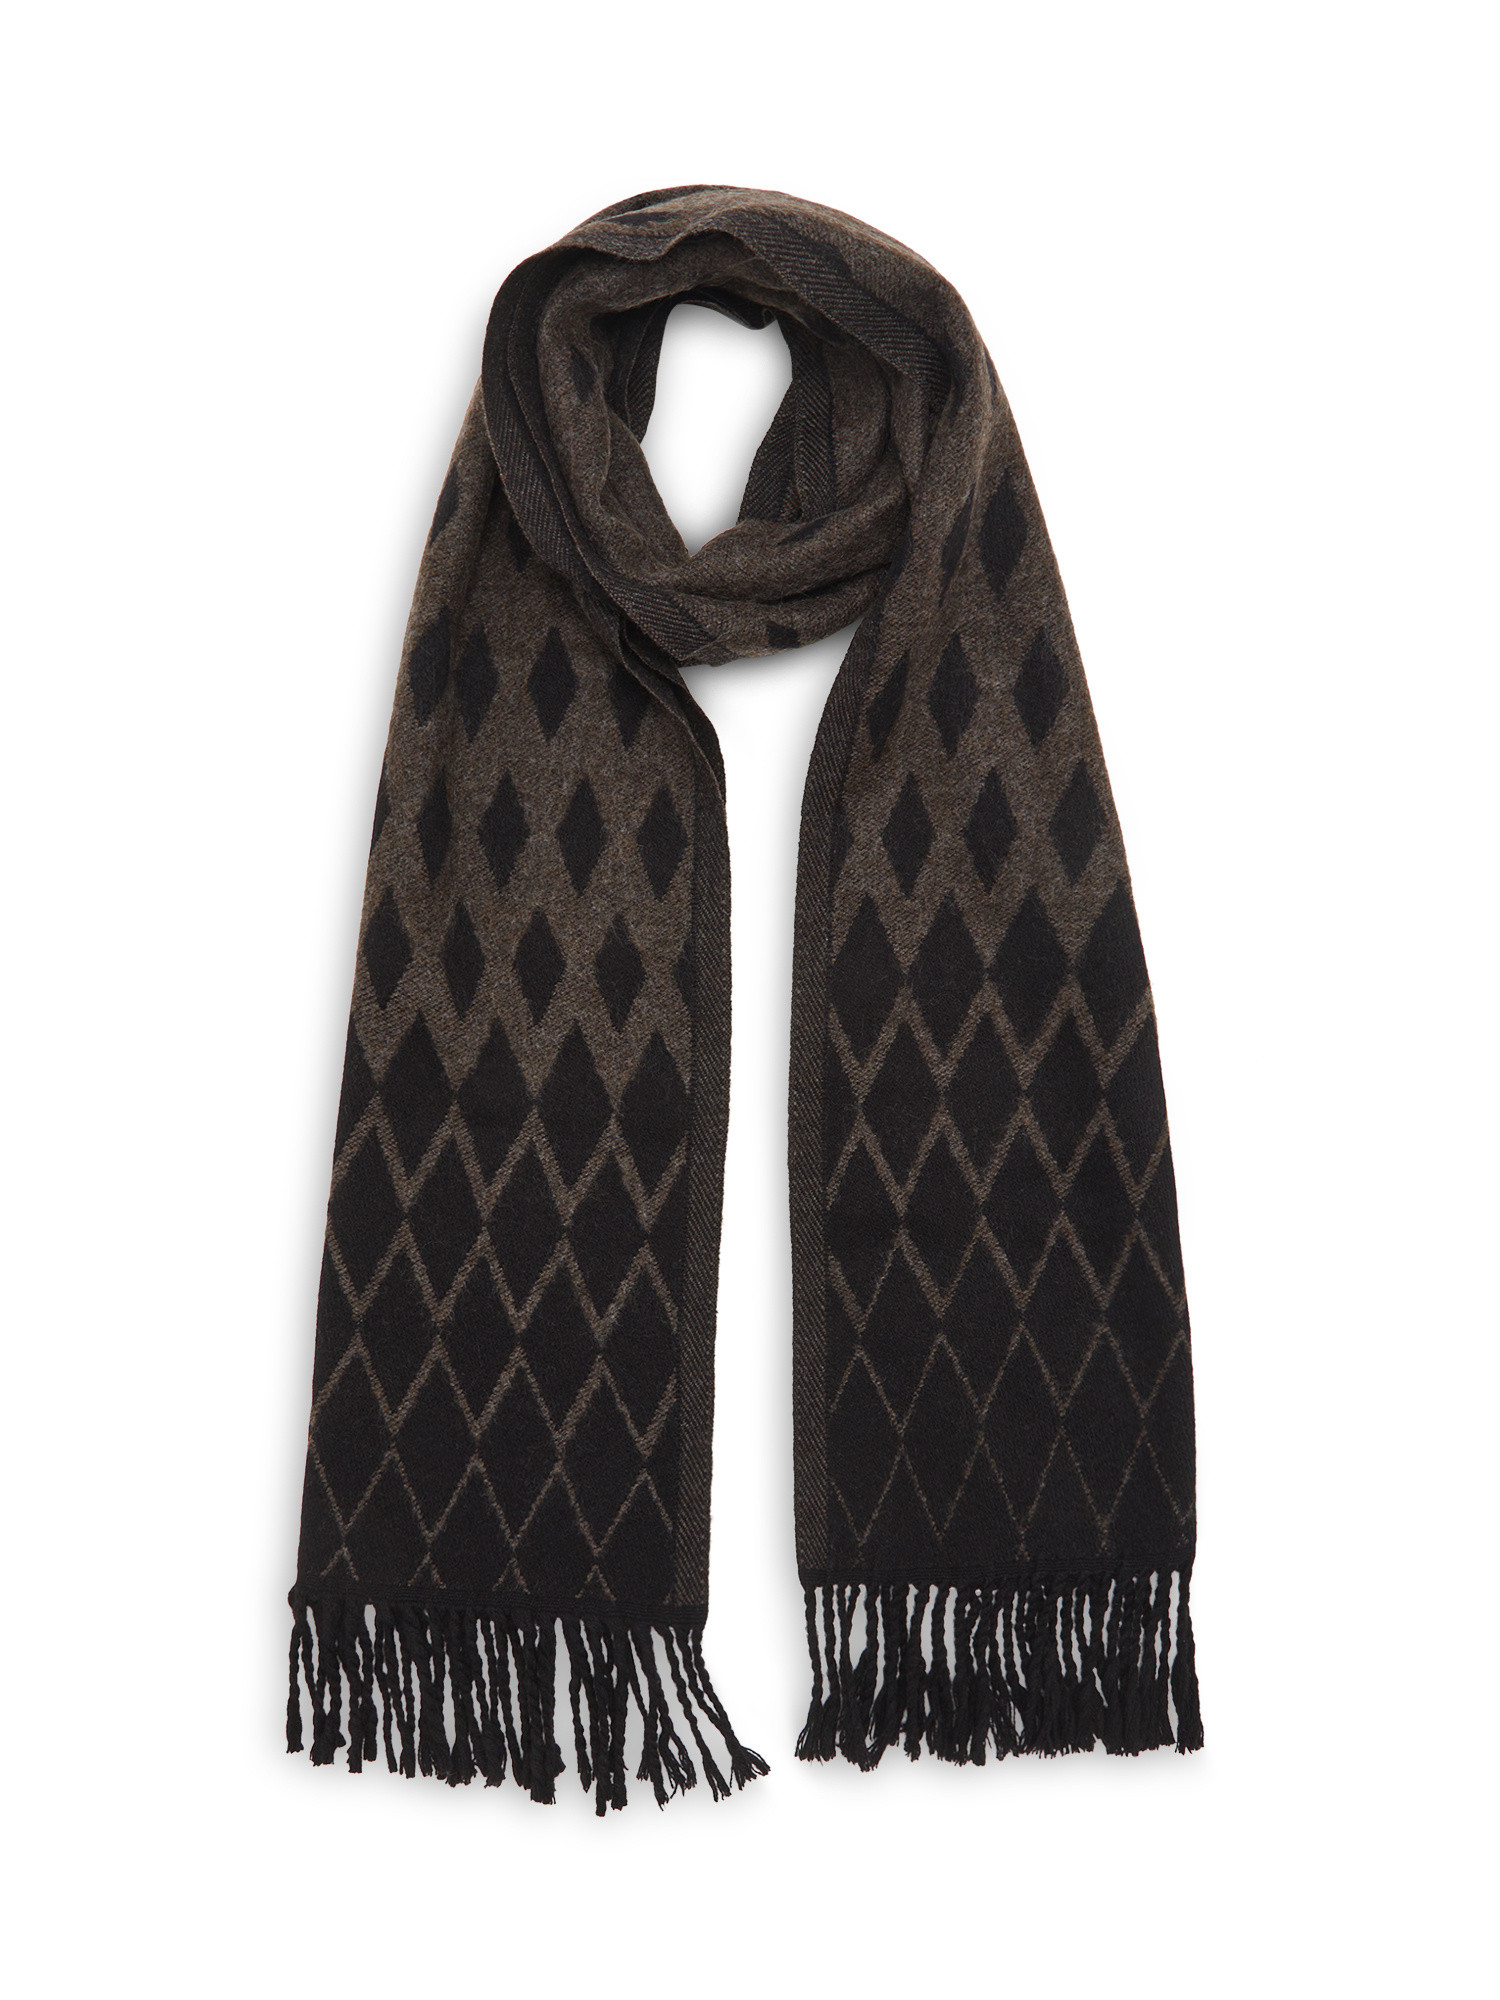 Luca D'Altieri - Fabric scarf, Black / Brown, large image number 0